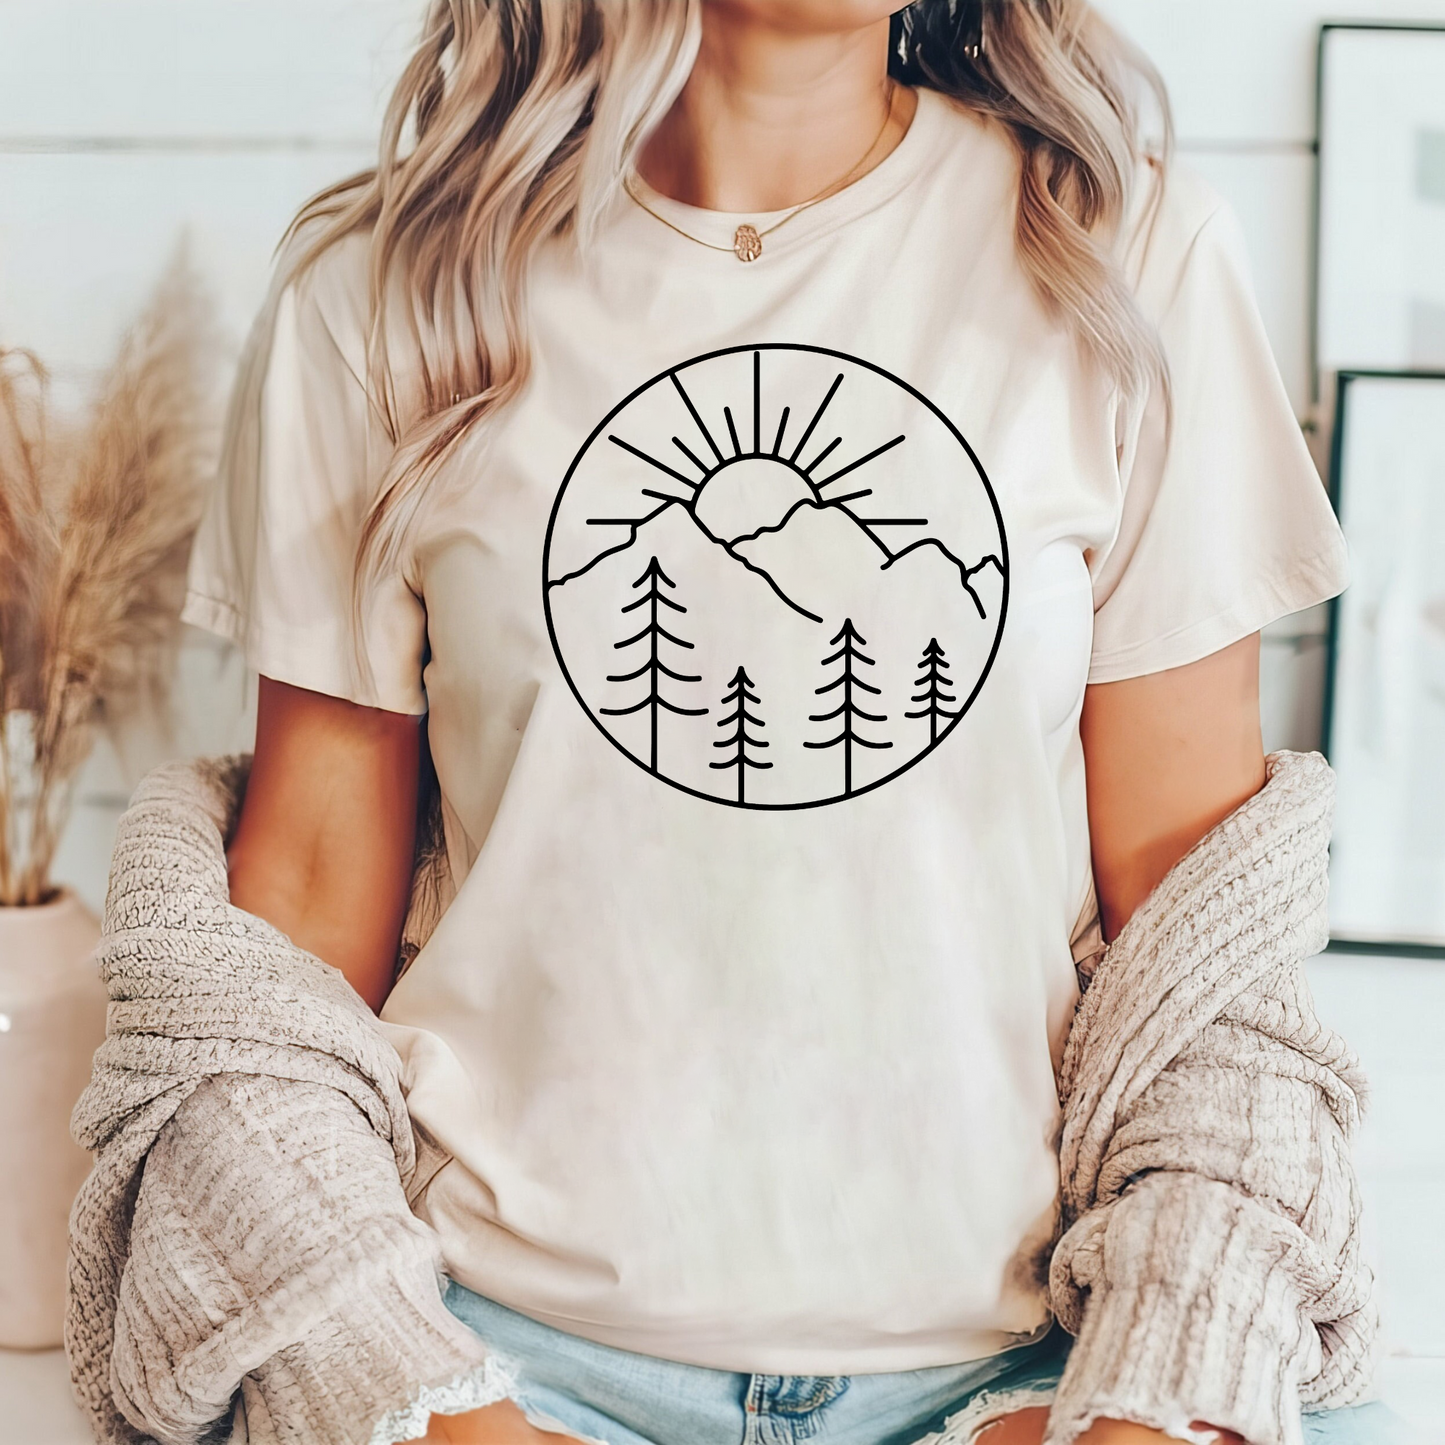 Abenteuer-T-Shirt - Geschenk für Naturfreunde